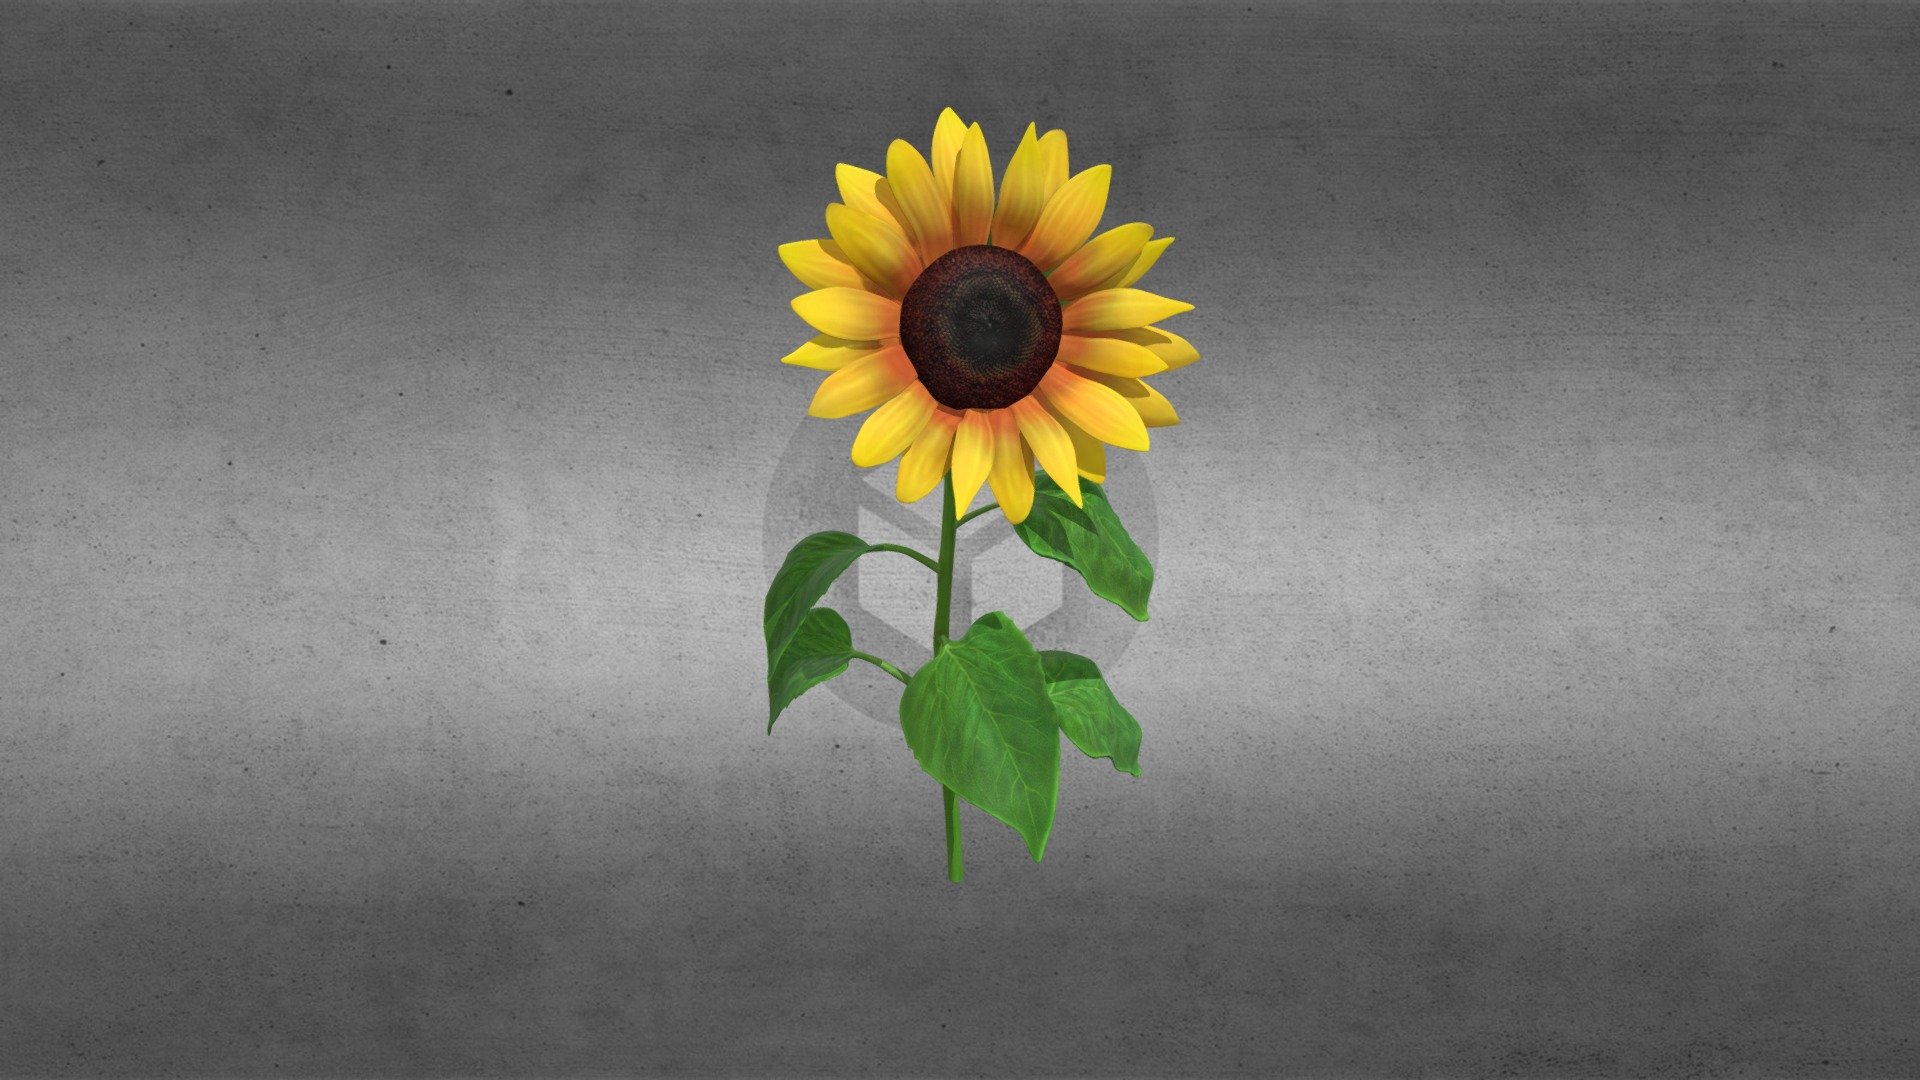 1. Sunflower 3D Acrylic Nail Art Tutorial - wide 2